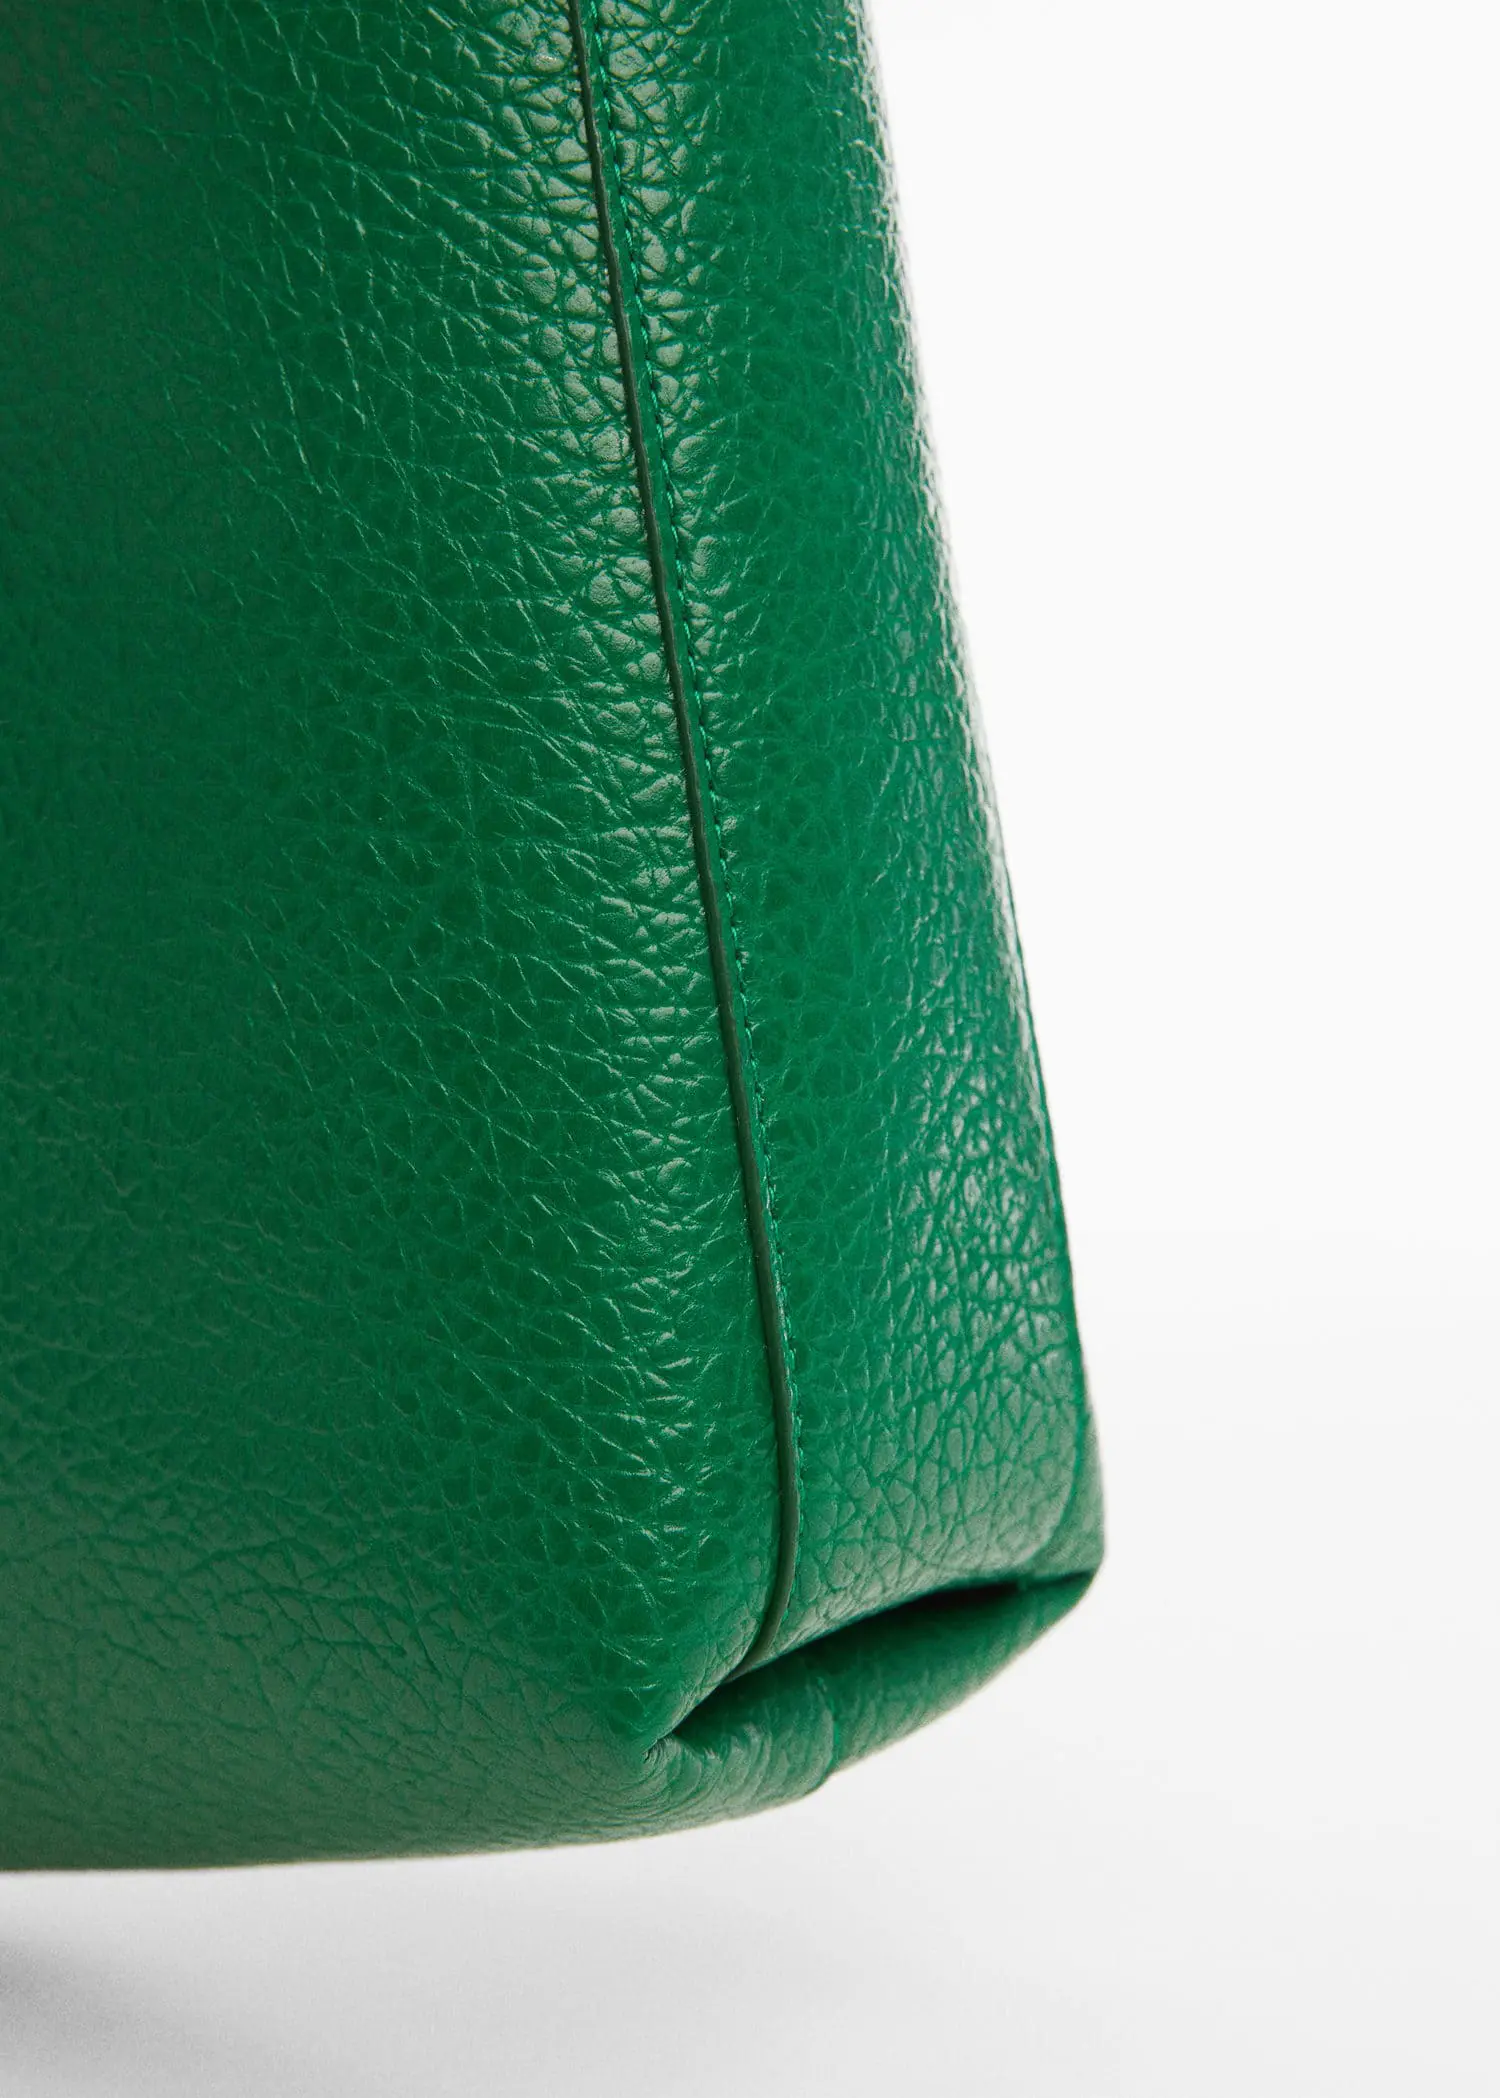 Mango Leather-effect shopper bag. 3